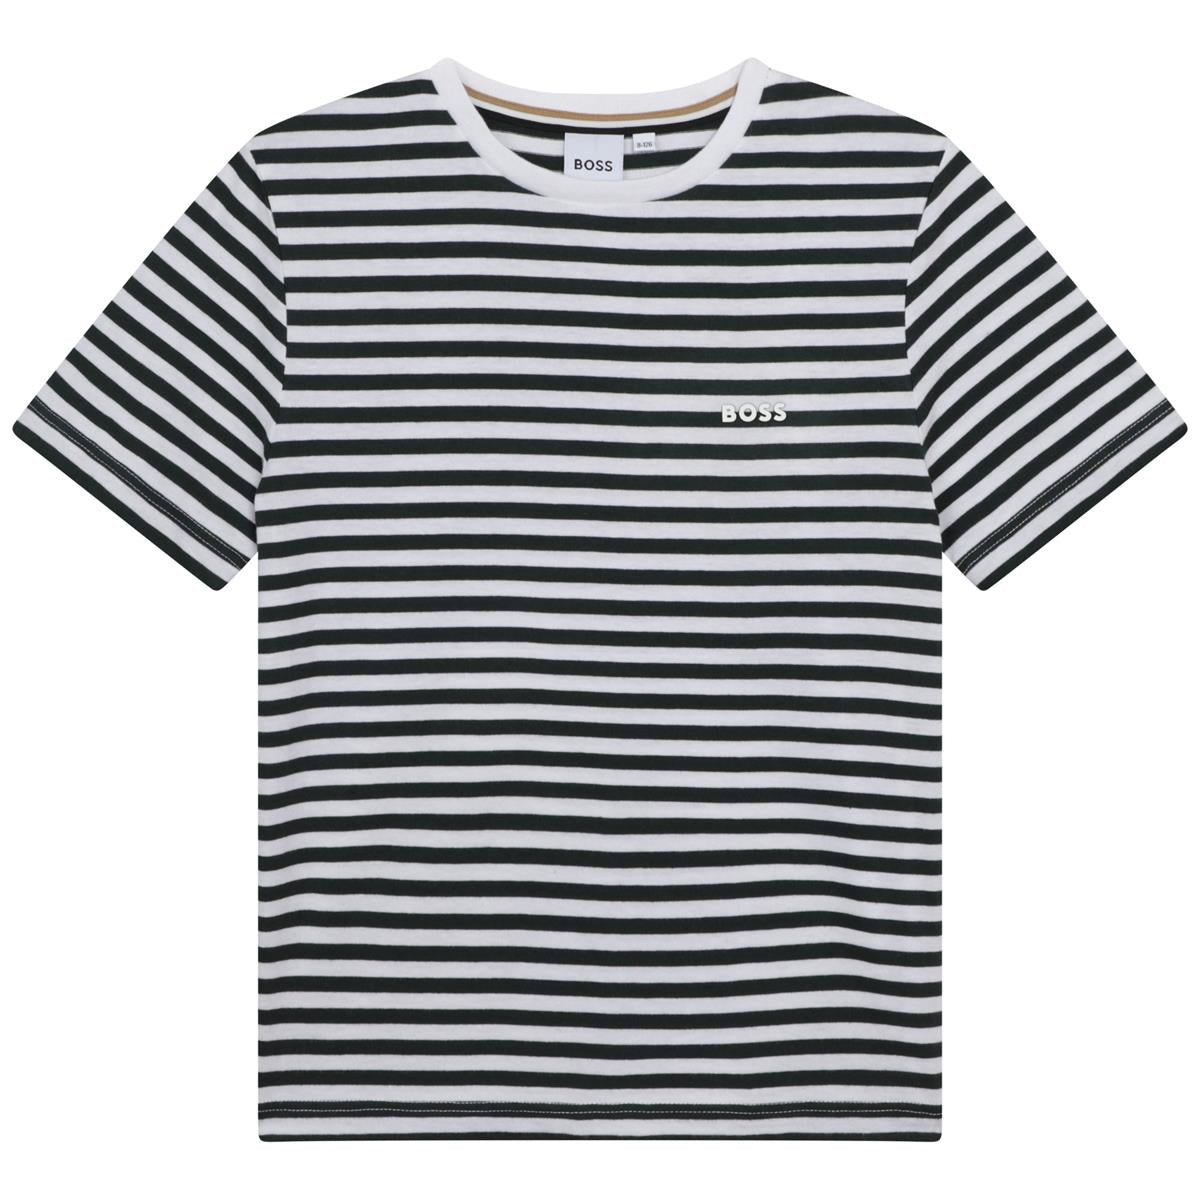 Boys Navy Stripes T-Shirt